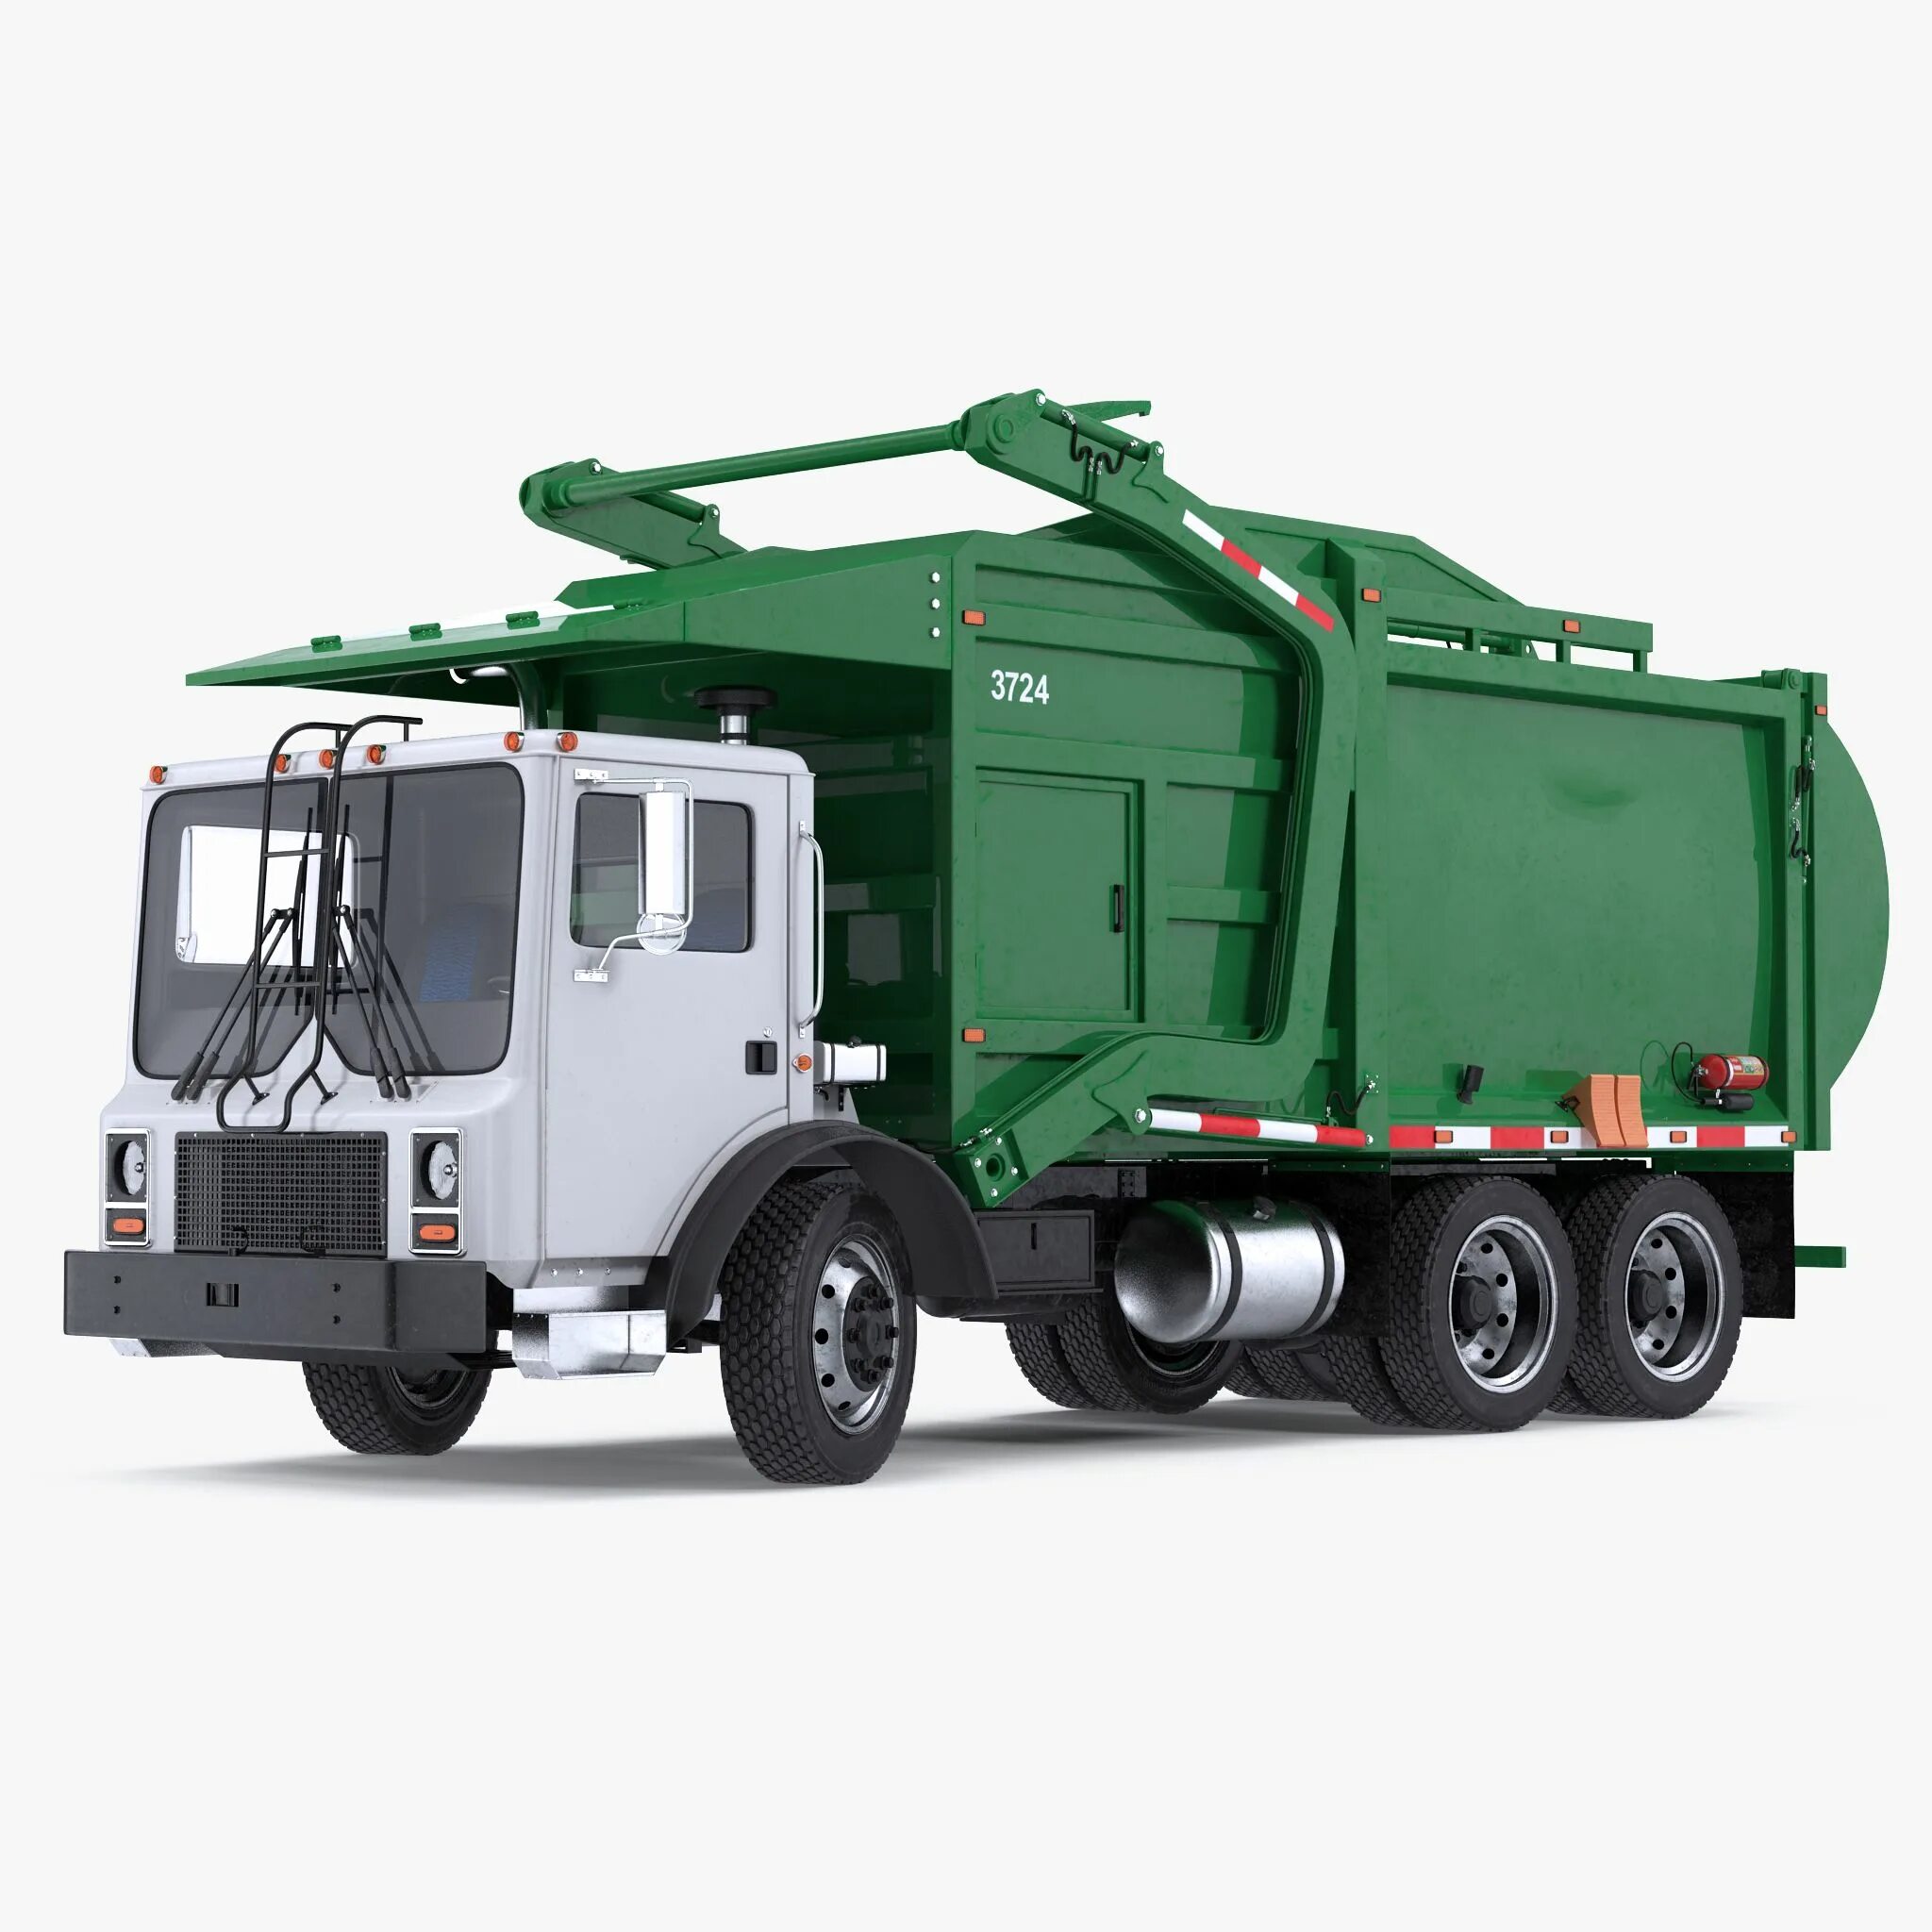 Мусоровоз 3. Garbage Truck мусоровоз. МВ-10 мусоровоз. Компактор для мусоровоза.